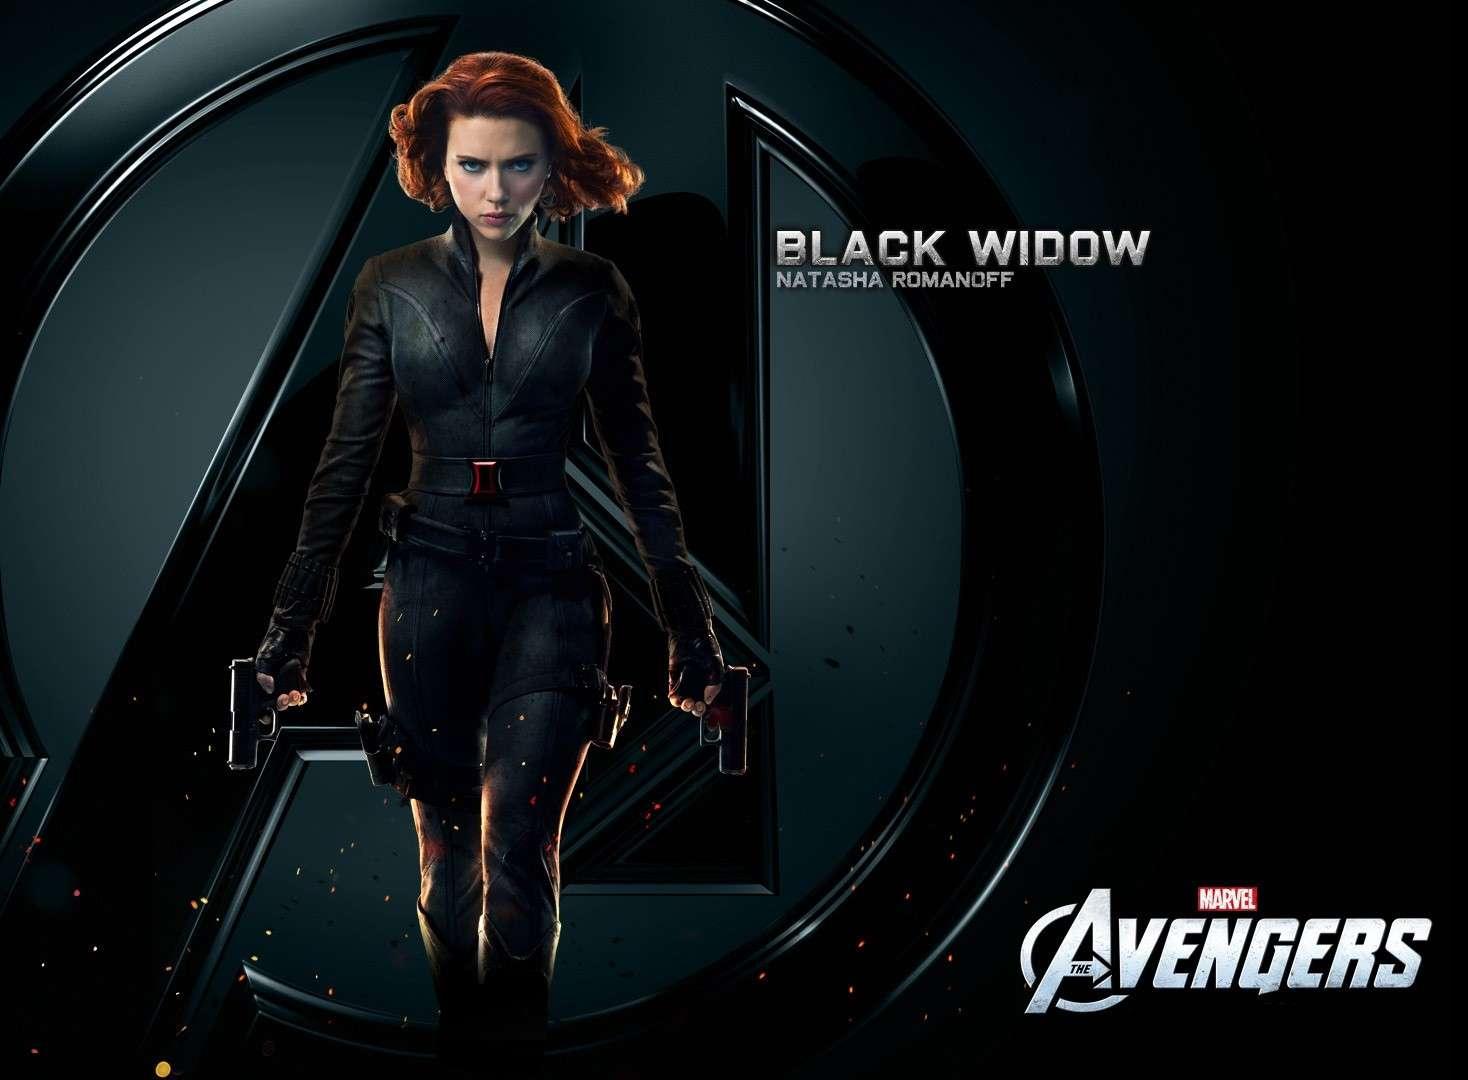 Black Widow   The Avengers   Black Widow Photo 30737253 1468x1080